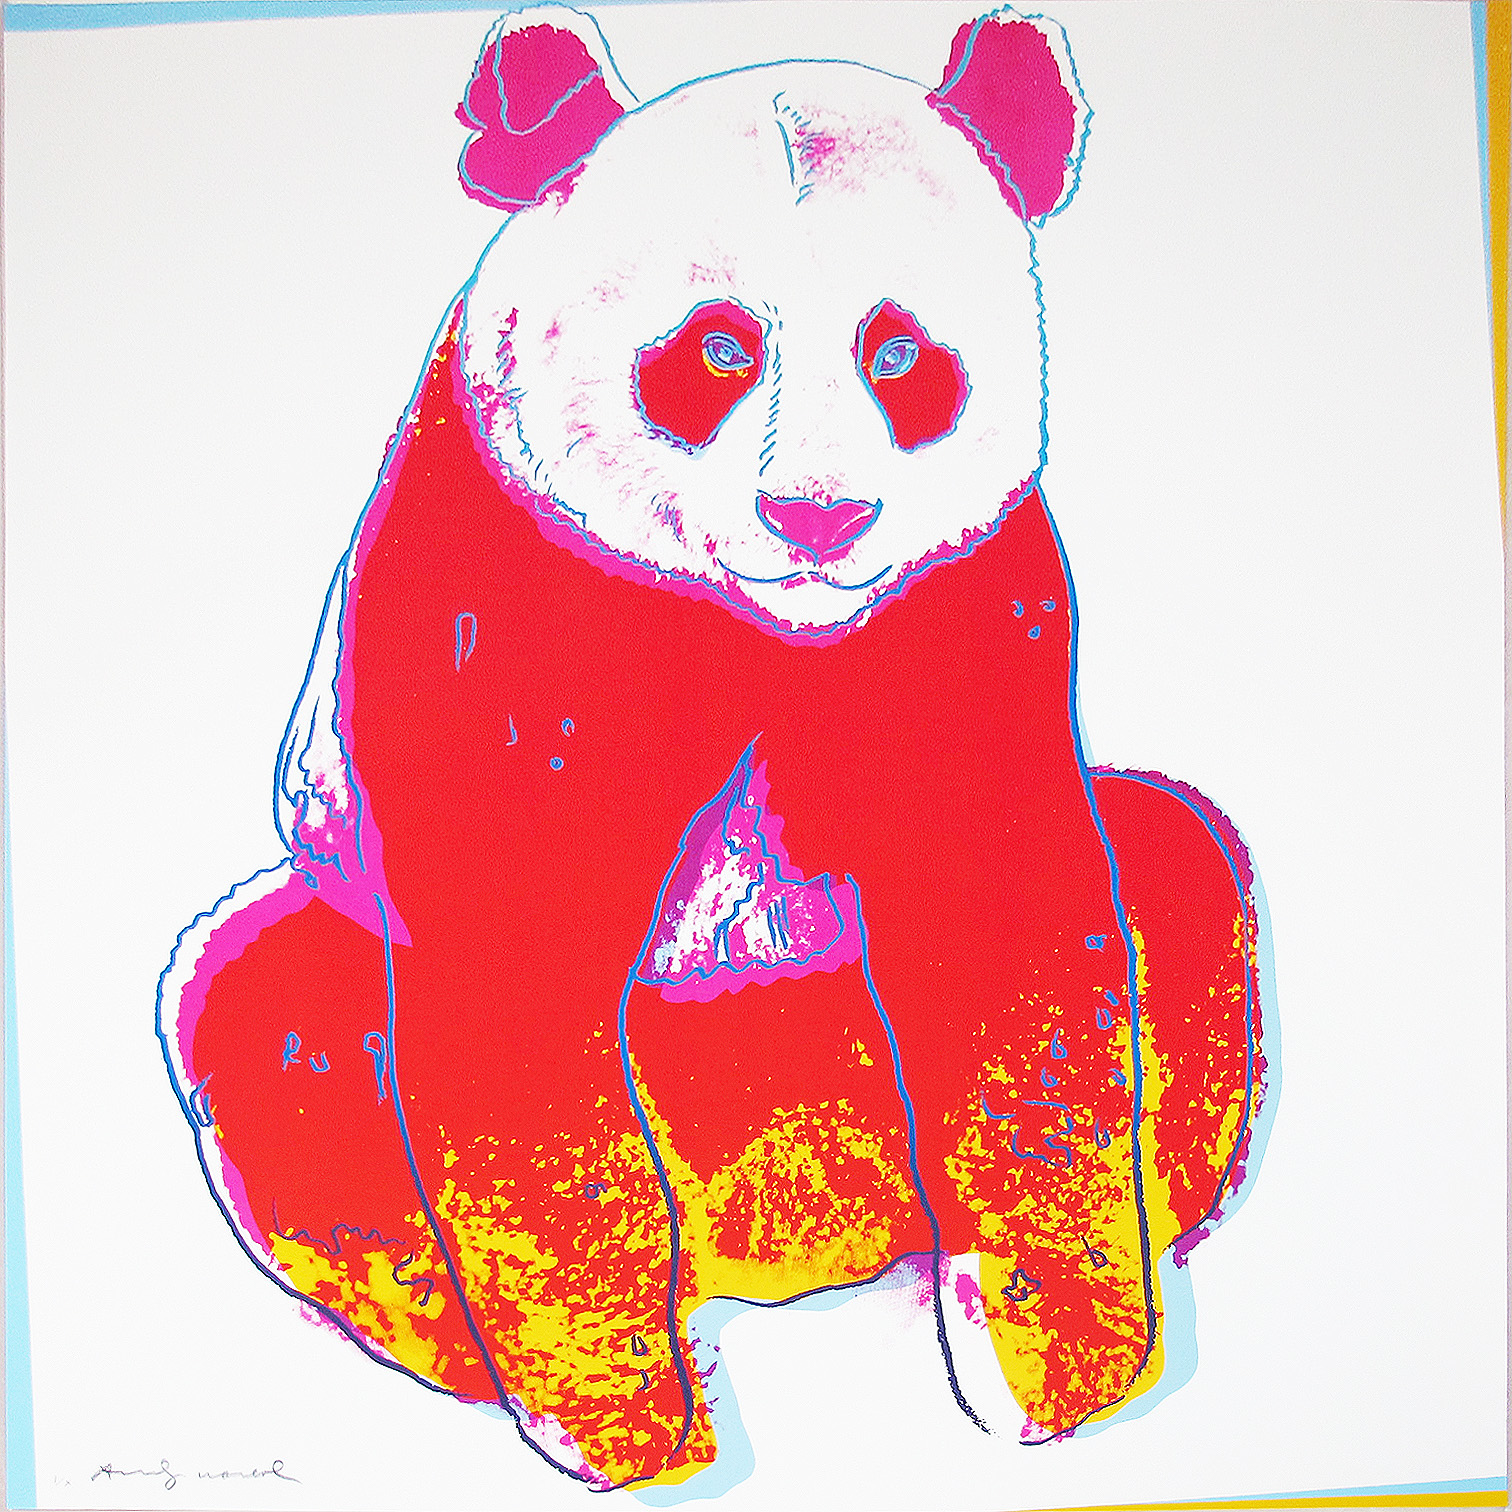 Andy Warhol | Endangered Species | Giant Panda 295 | 1983 | Image of Artists' work.